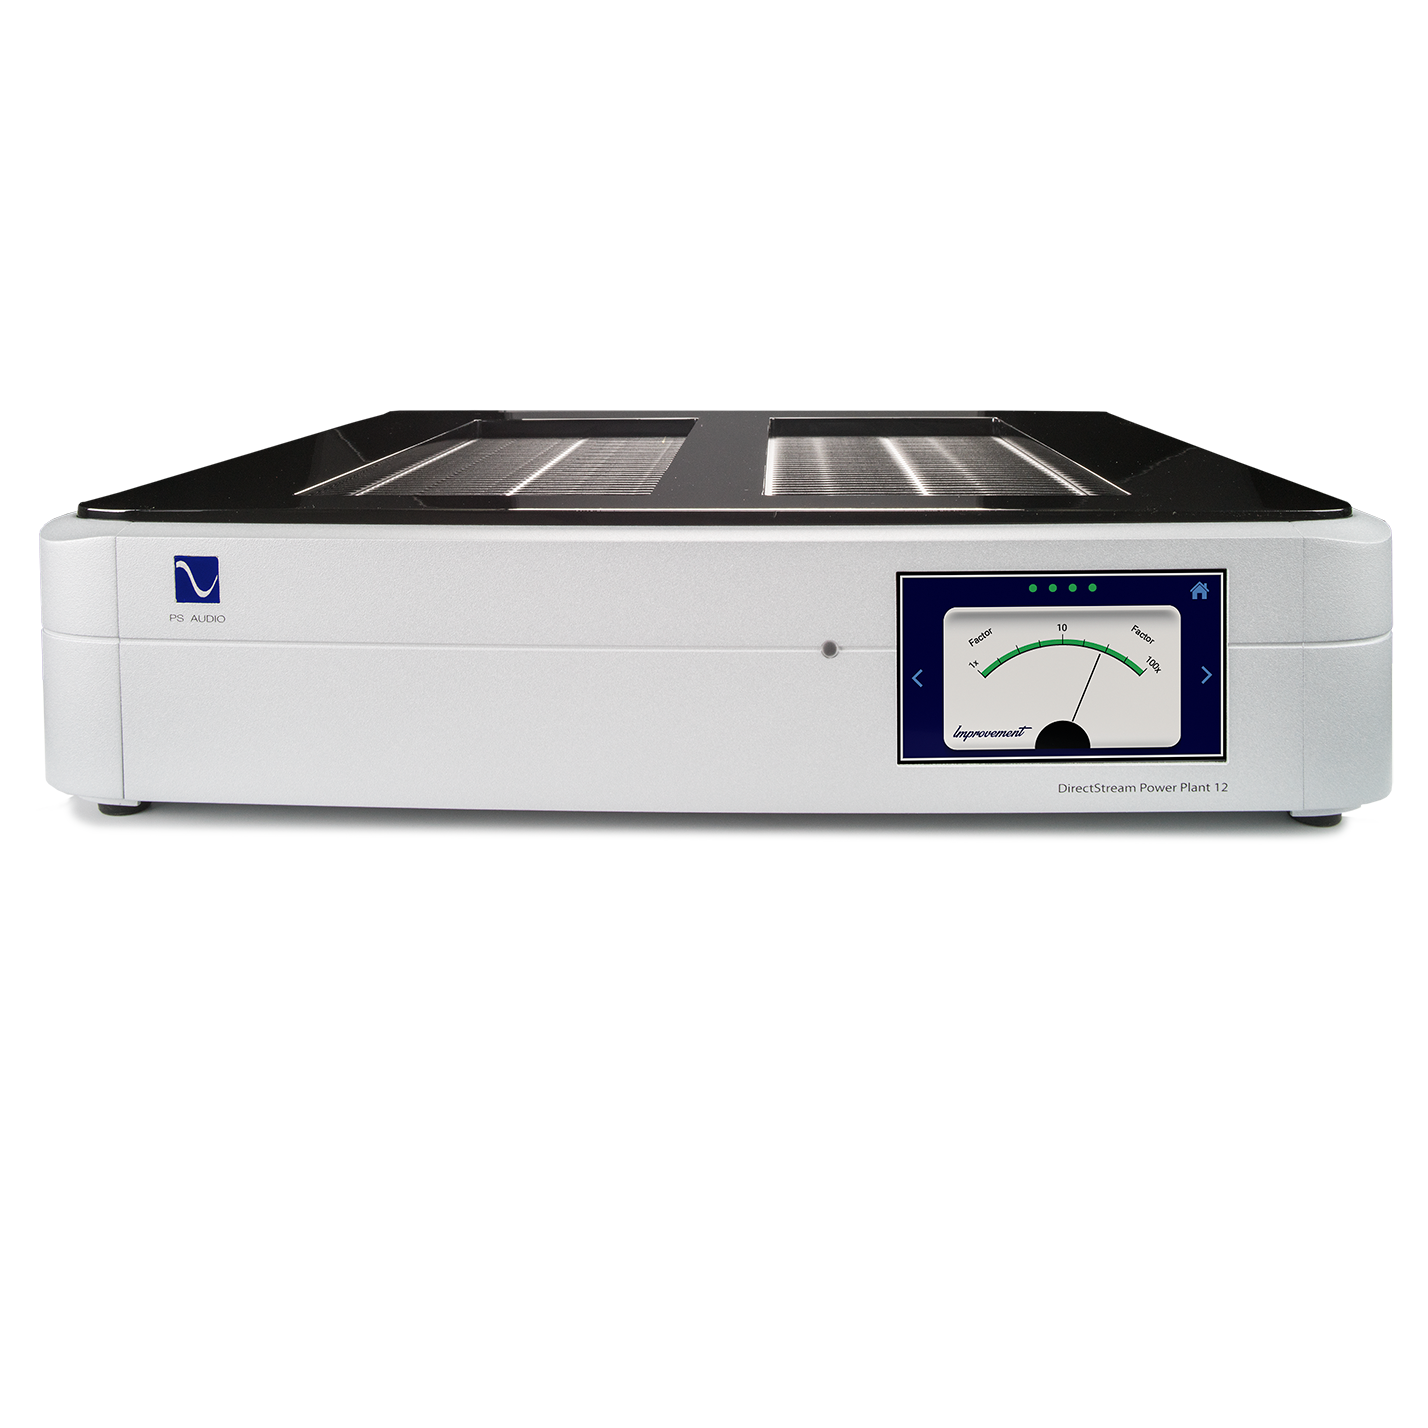 Регенераторы PS Audio DirectStream Power Plant 12 silver hifi audio amplifier rectifier filter power supply board soft start pcb